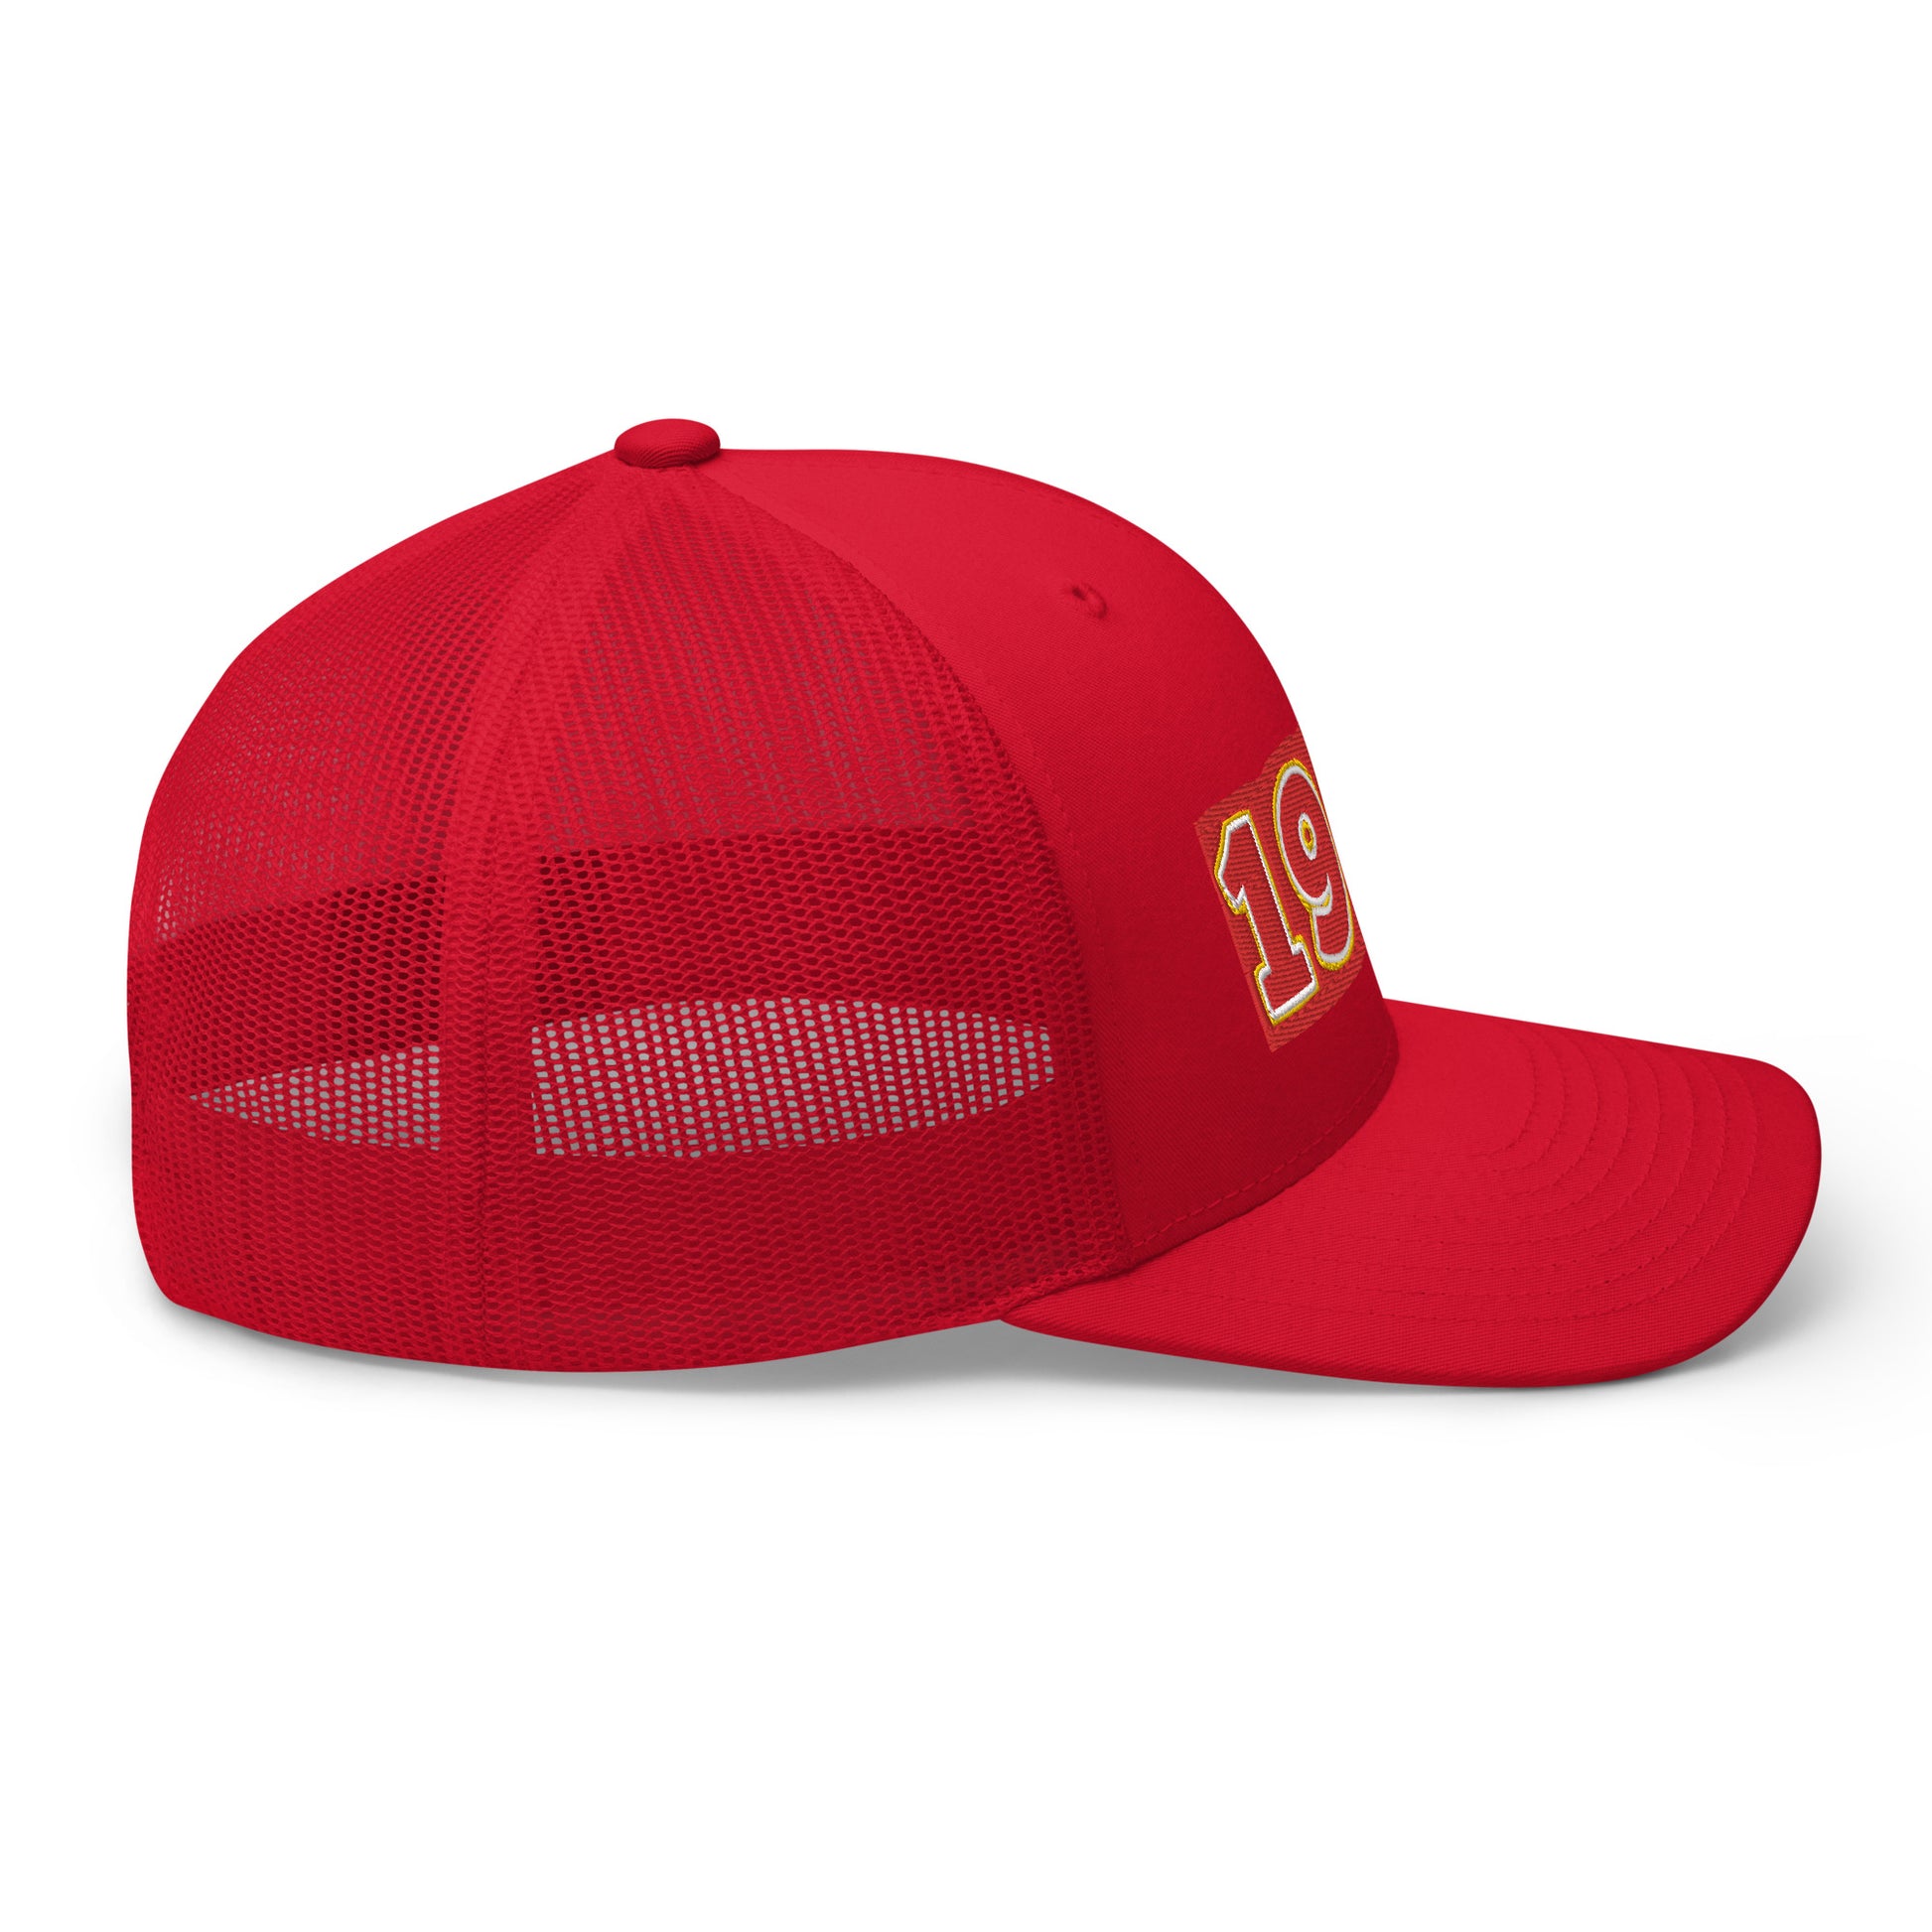 1960 Hat / Kansas City Hat / Chiefs Hat / Kansas City Chiefs Cap